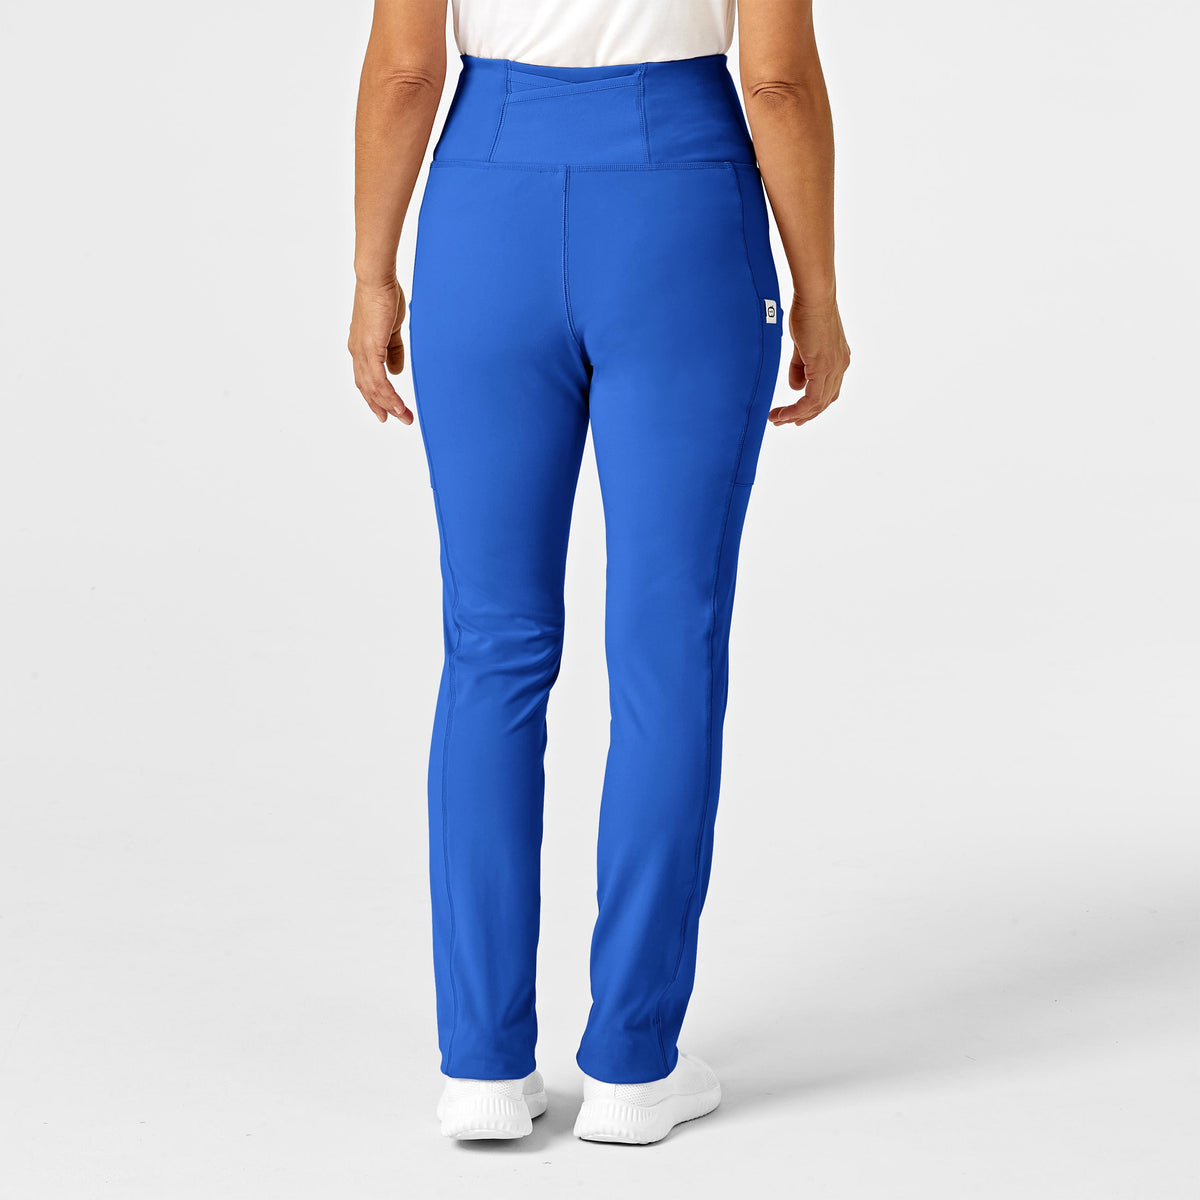 2 Back Pockets,Womens Bootcut Yoga Pants Flare Workout Pants,31,Navy,Size XL